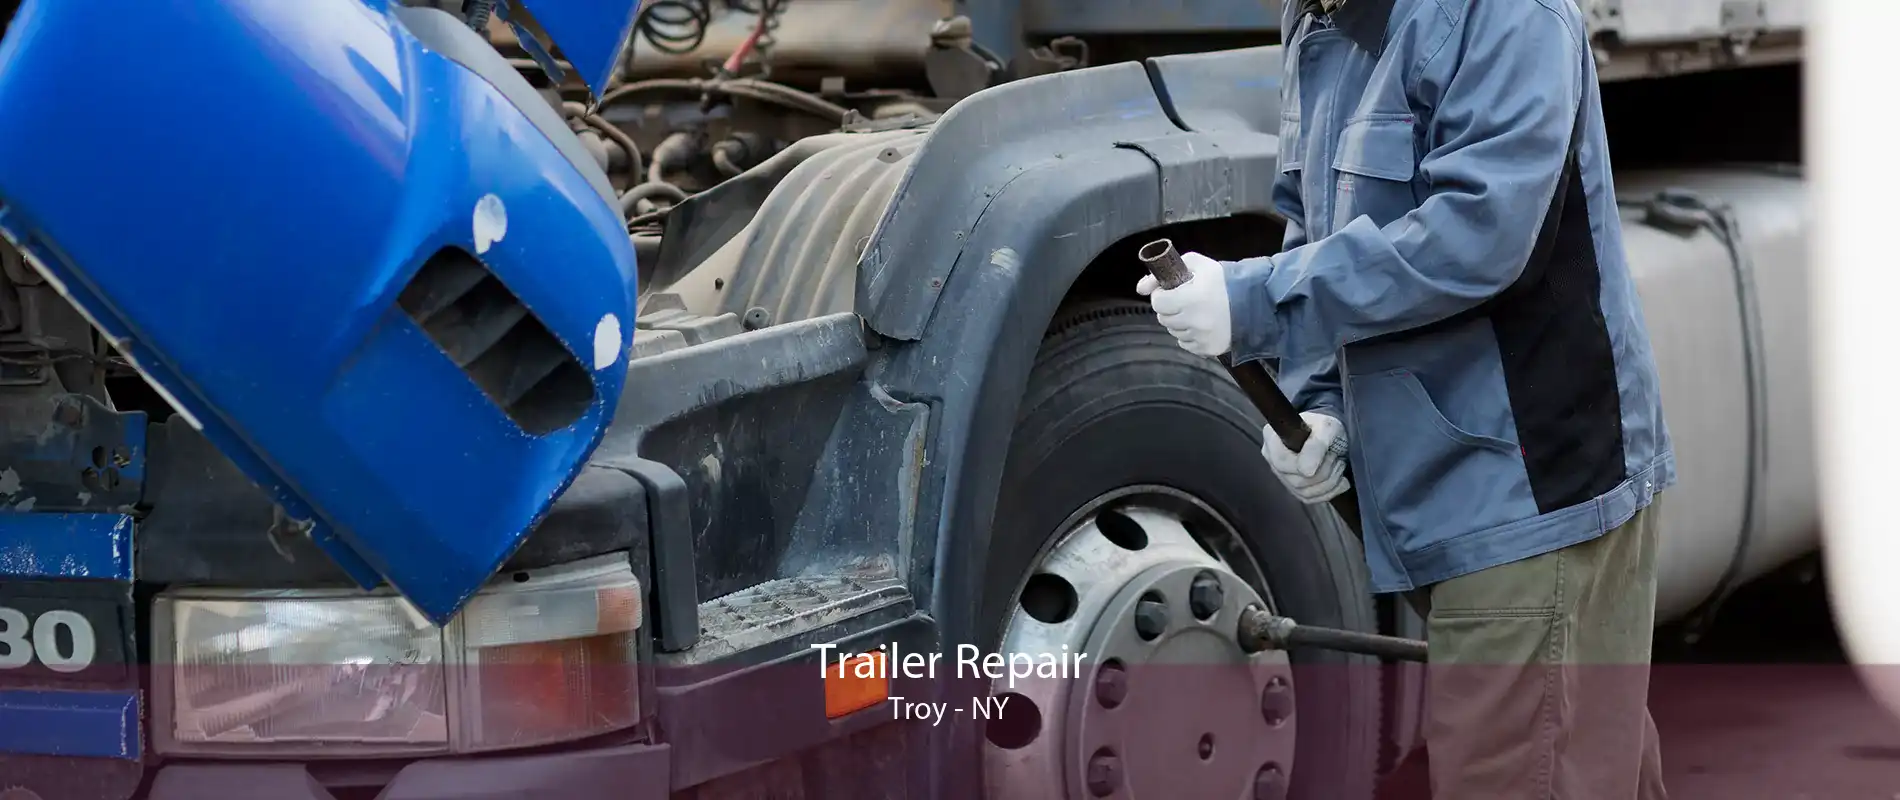 Trailer Repair Troy - NY